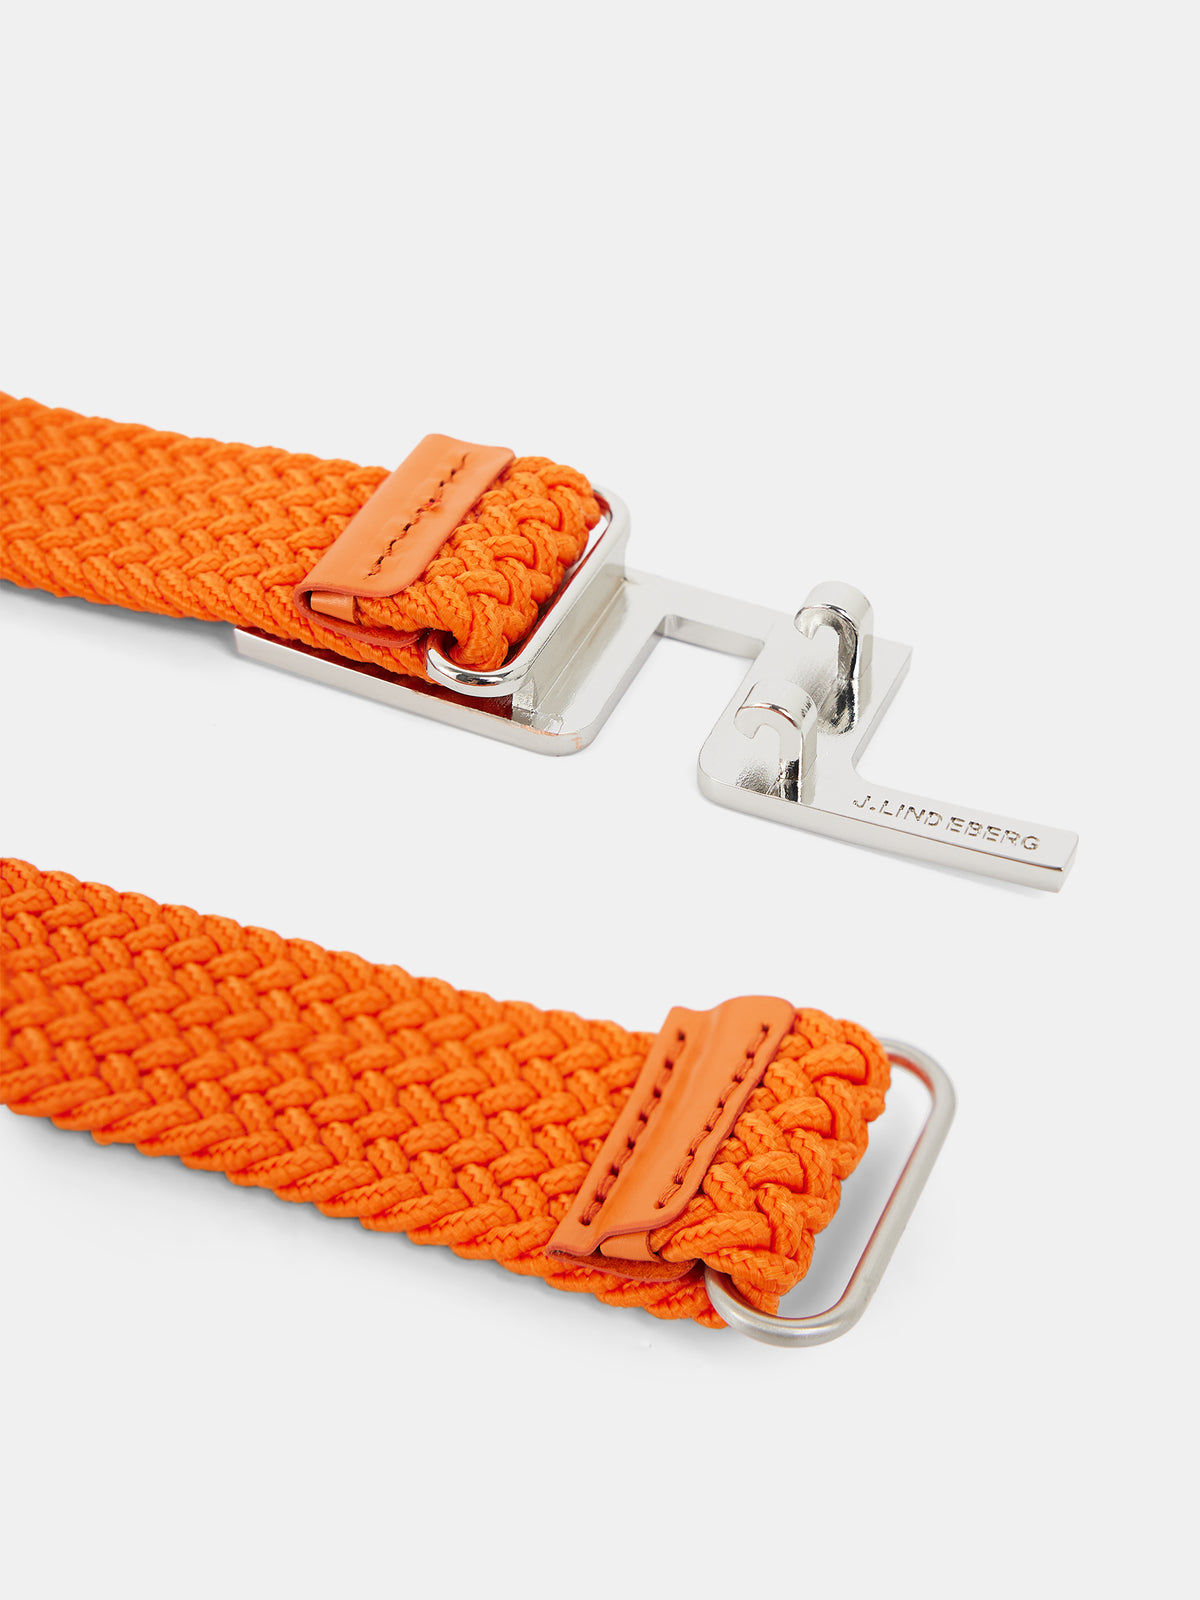 Lykke Braided Belt / Russet Orange